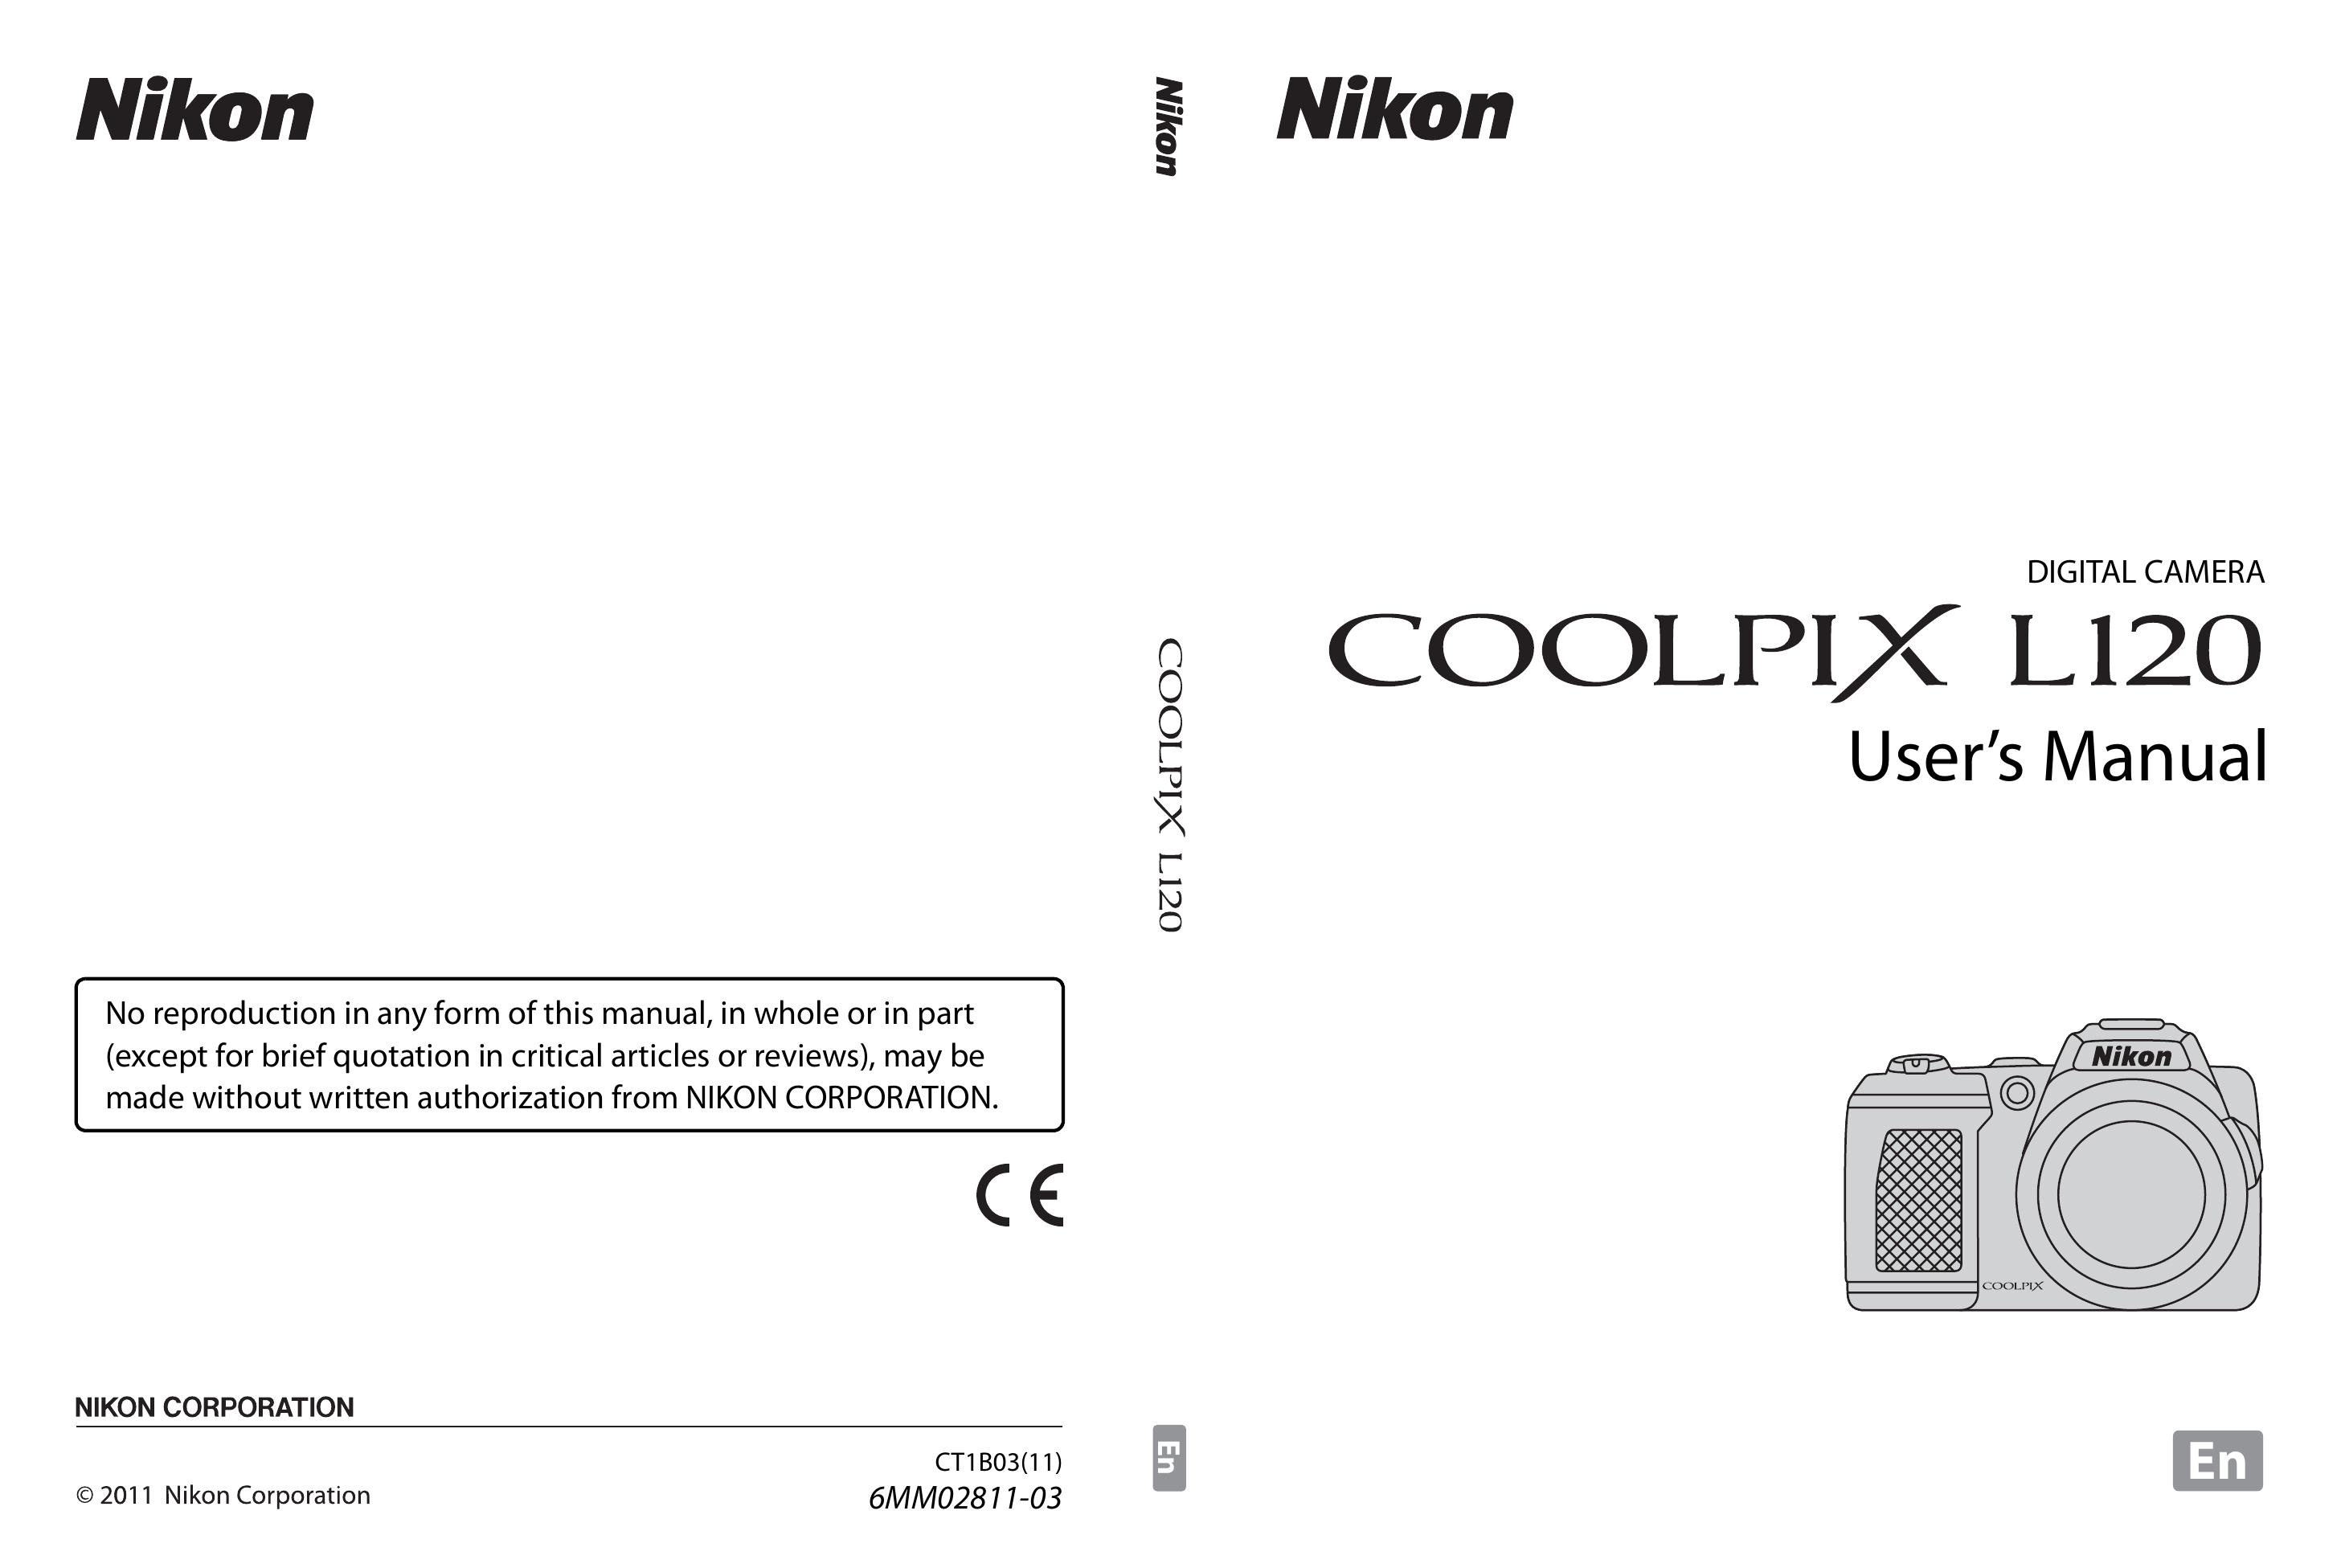 Nikon COOLPIXL120RED Camcorder User Manual